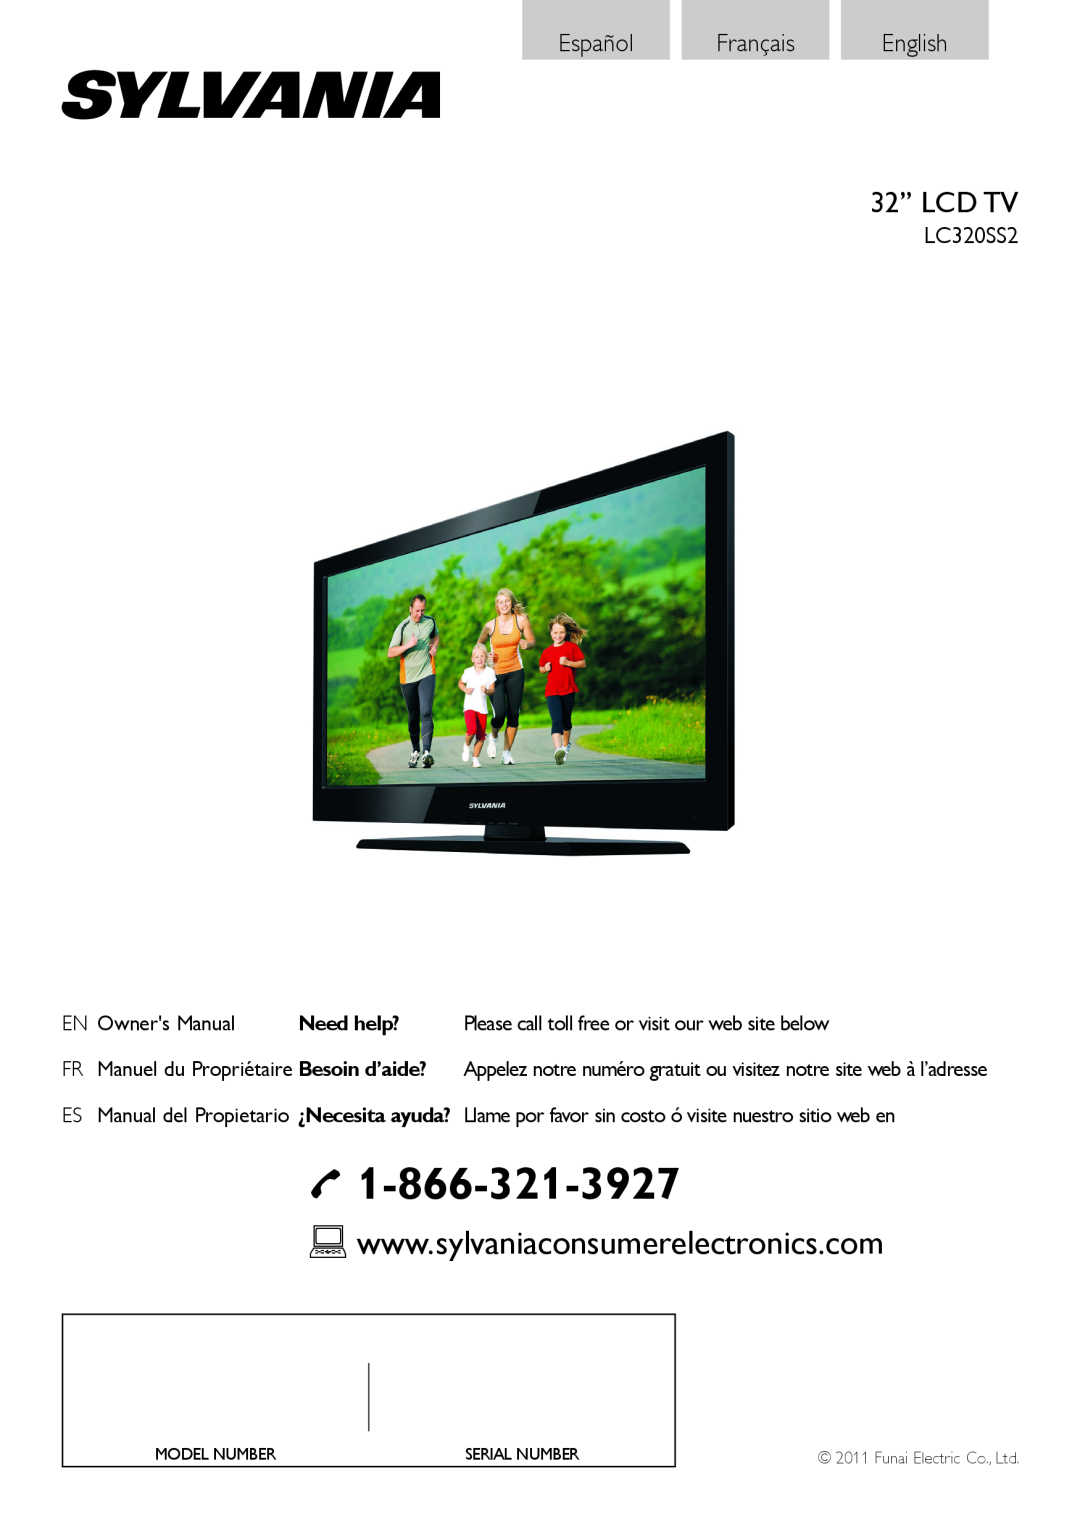 Sylvania LC320SS2 owner manual 32” LCD TV, Español Français English, Owners Manual, Need help? 